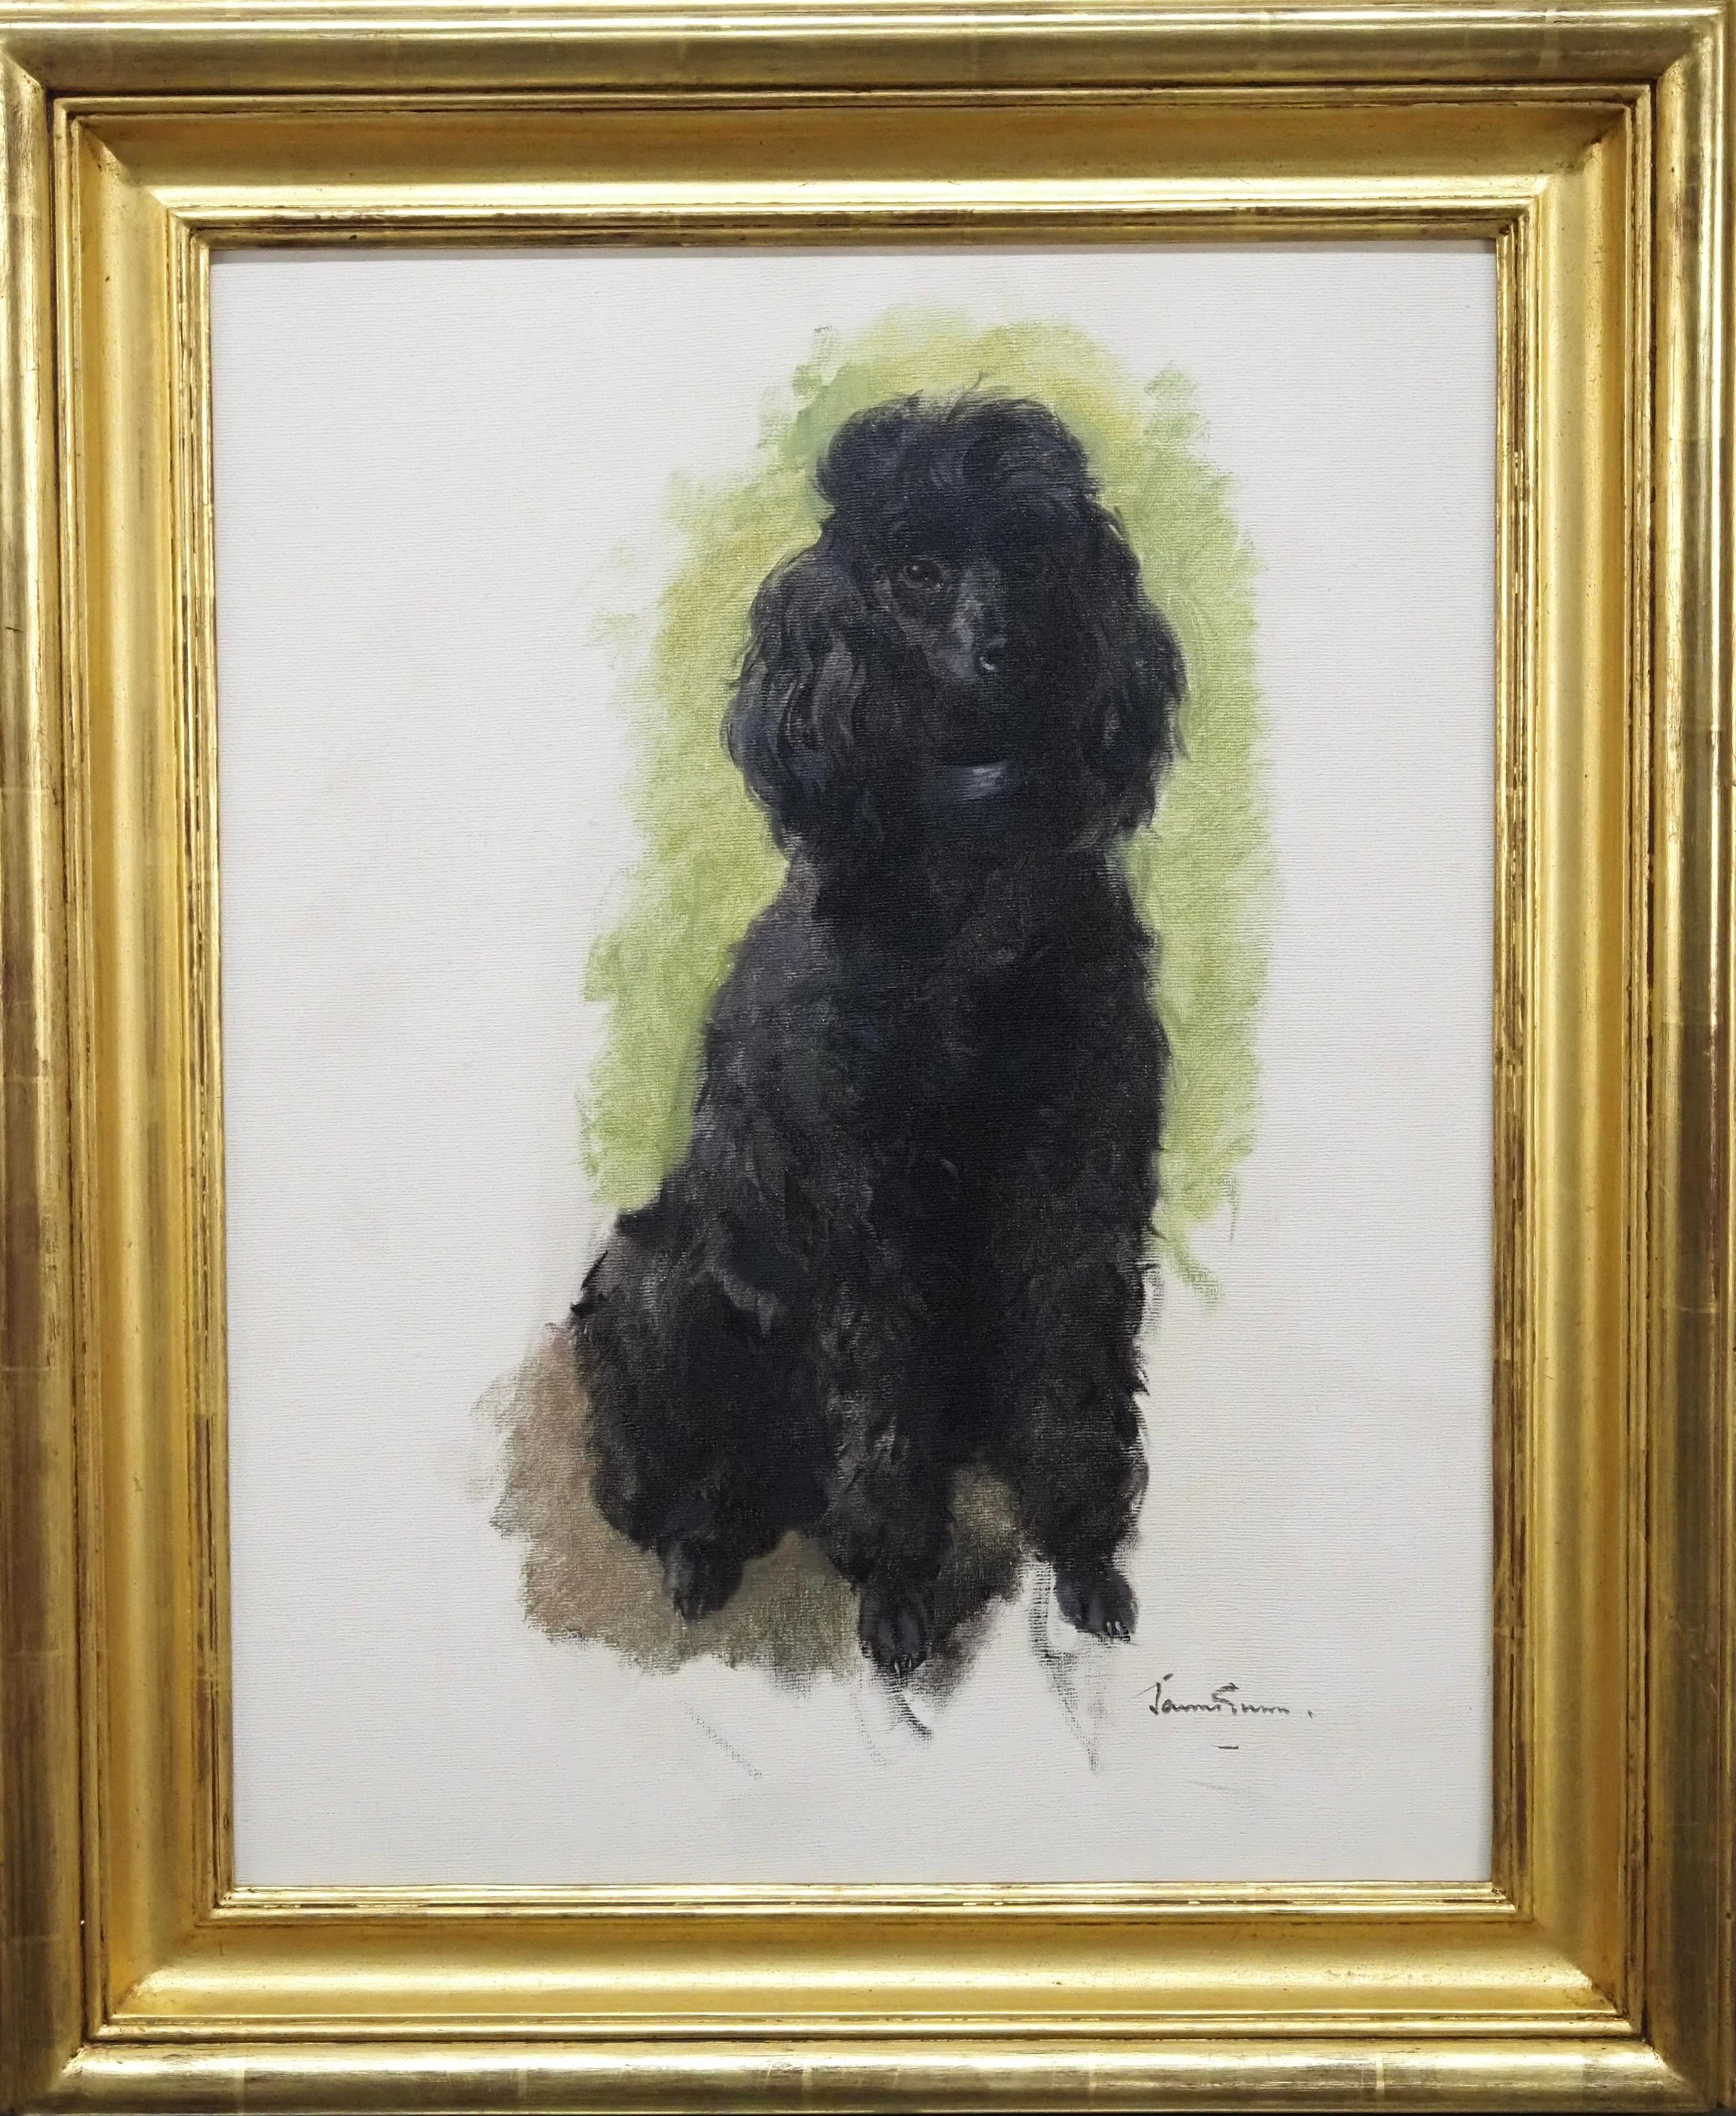 Herbert James Gunn Animal Painting - 'Alphonse' - Study of a Poodle